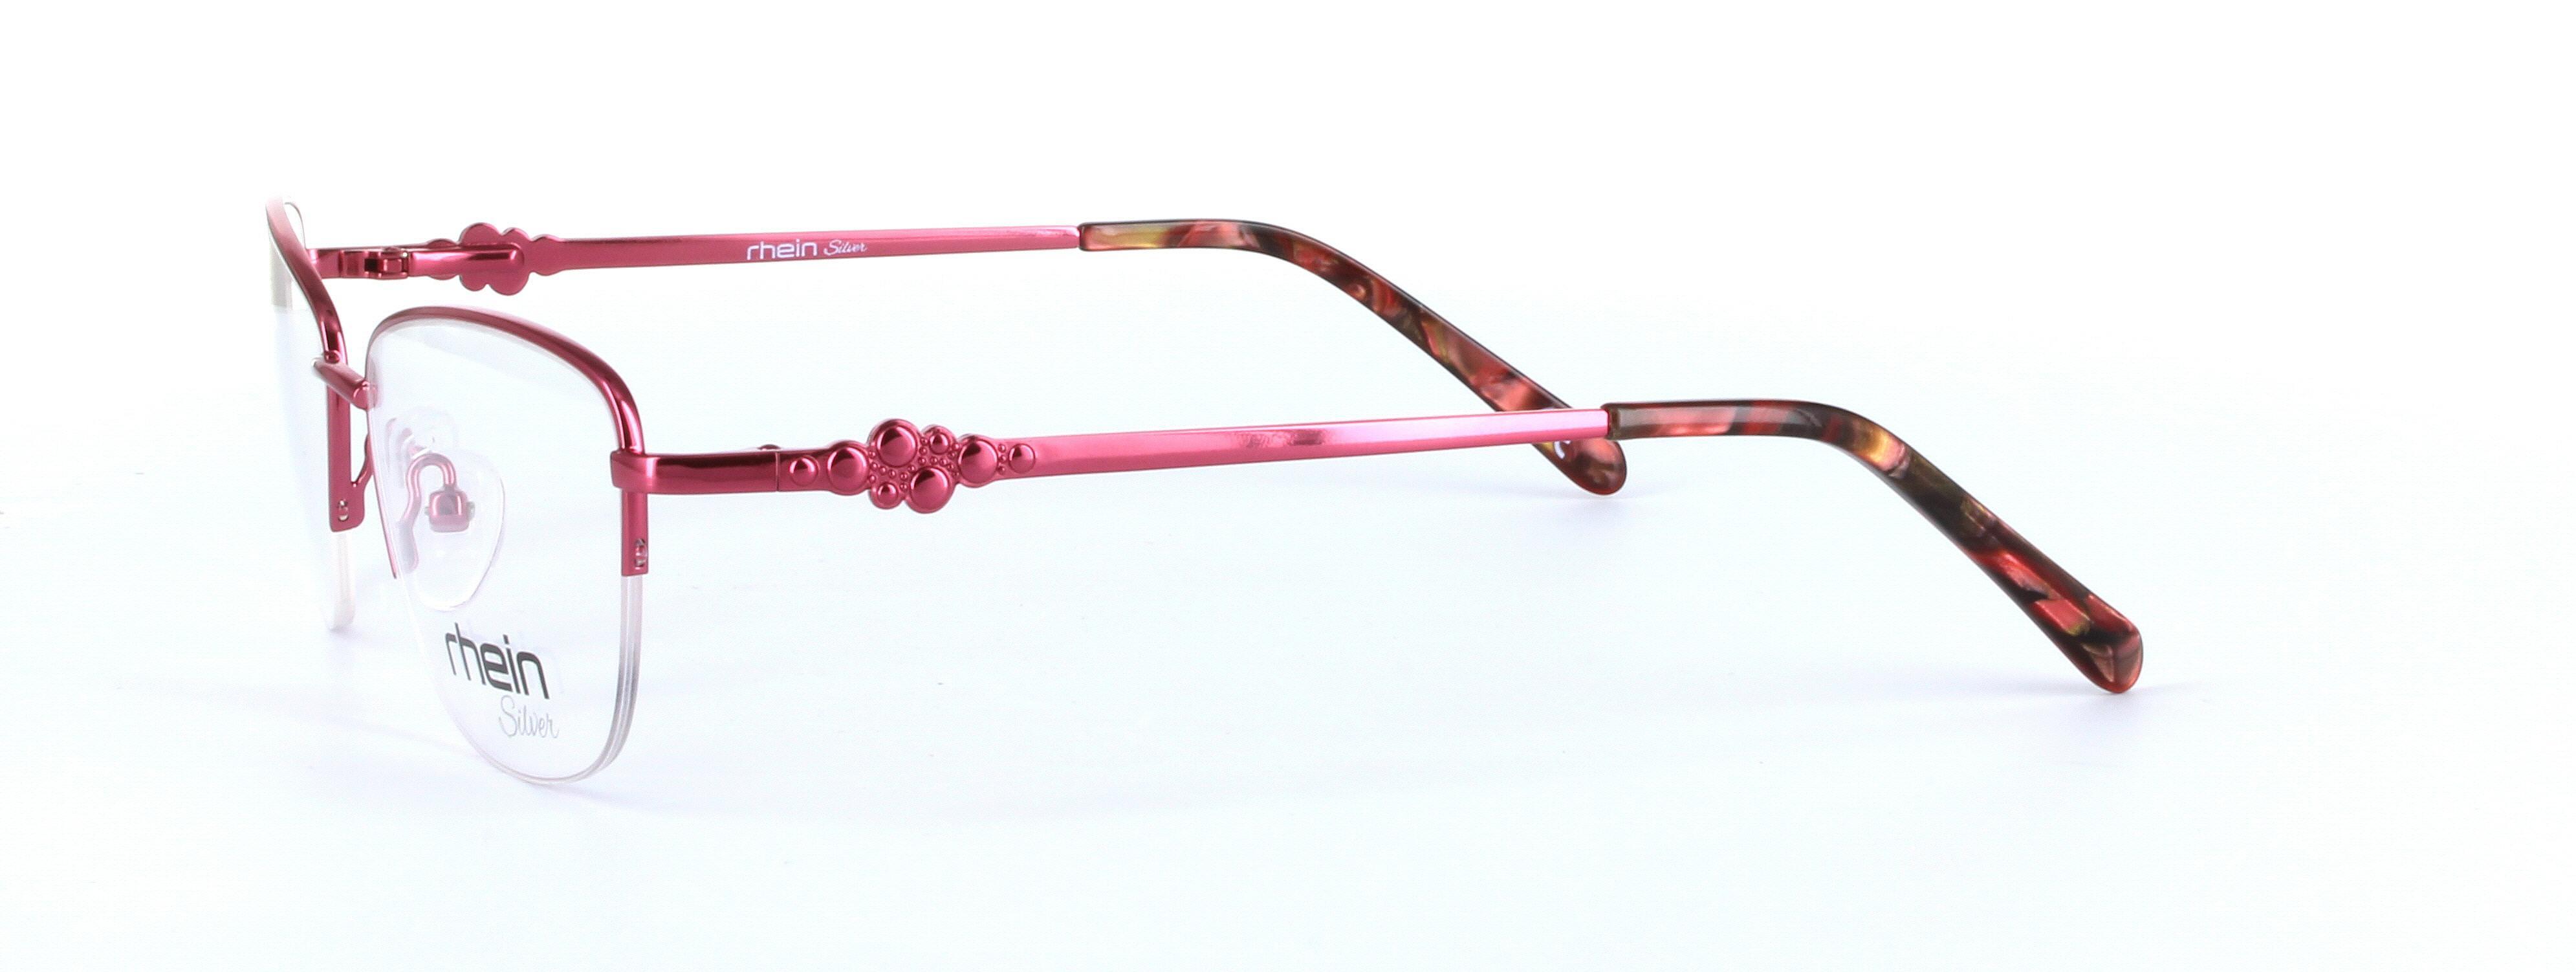 Alhambra Red Semi Rimless Rectangular Metal Glasses - Image View 2